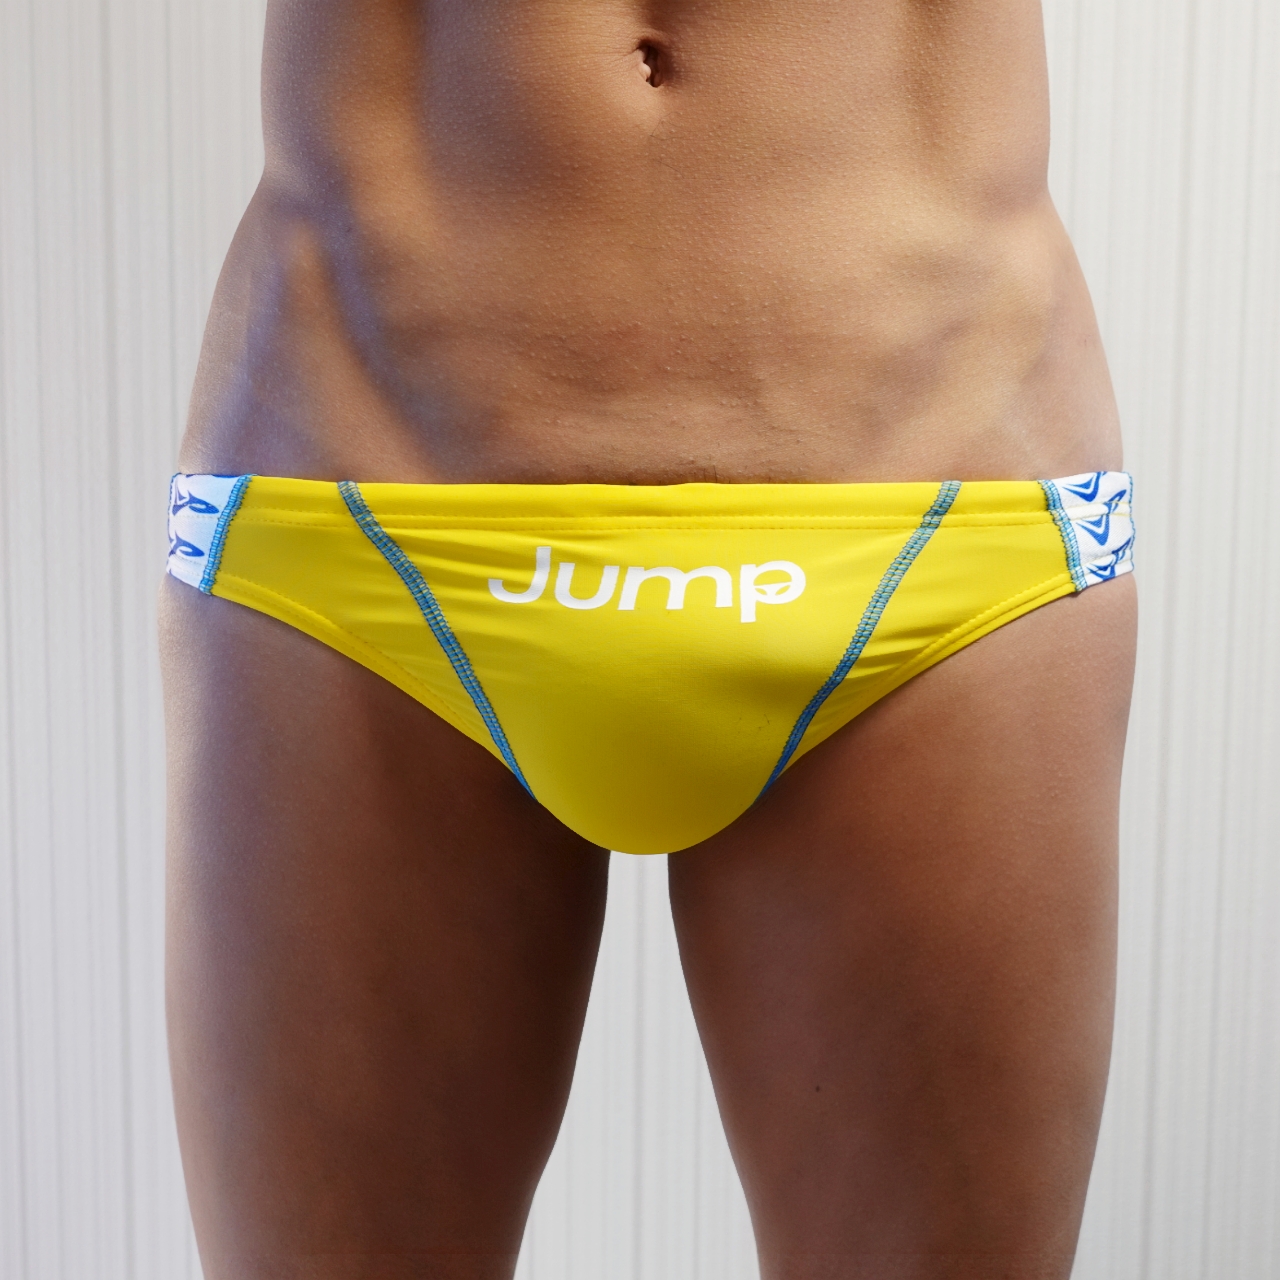 JUMP ONLINE STORE / ☆SALE☆JUMP メンズ競泳水着 SIDE-LOGO パプリカ 